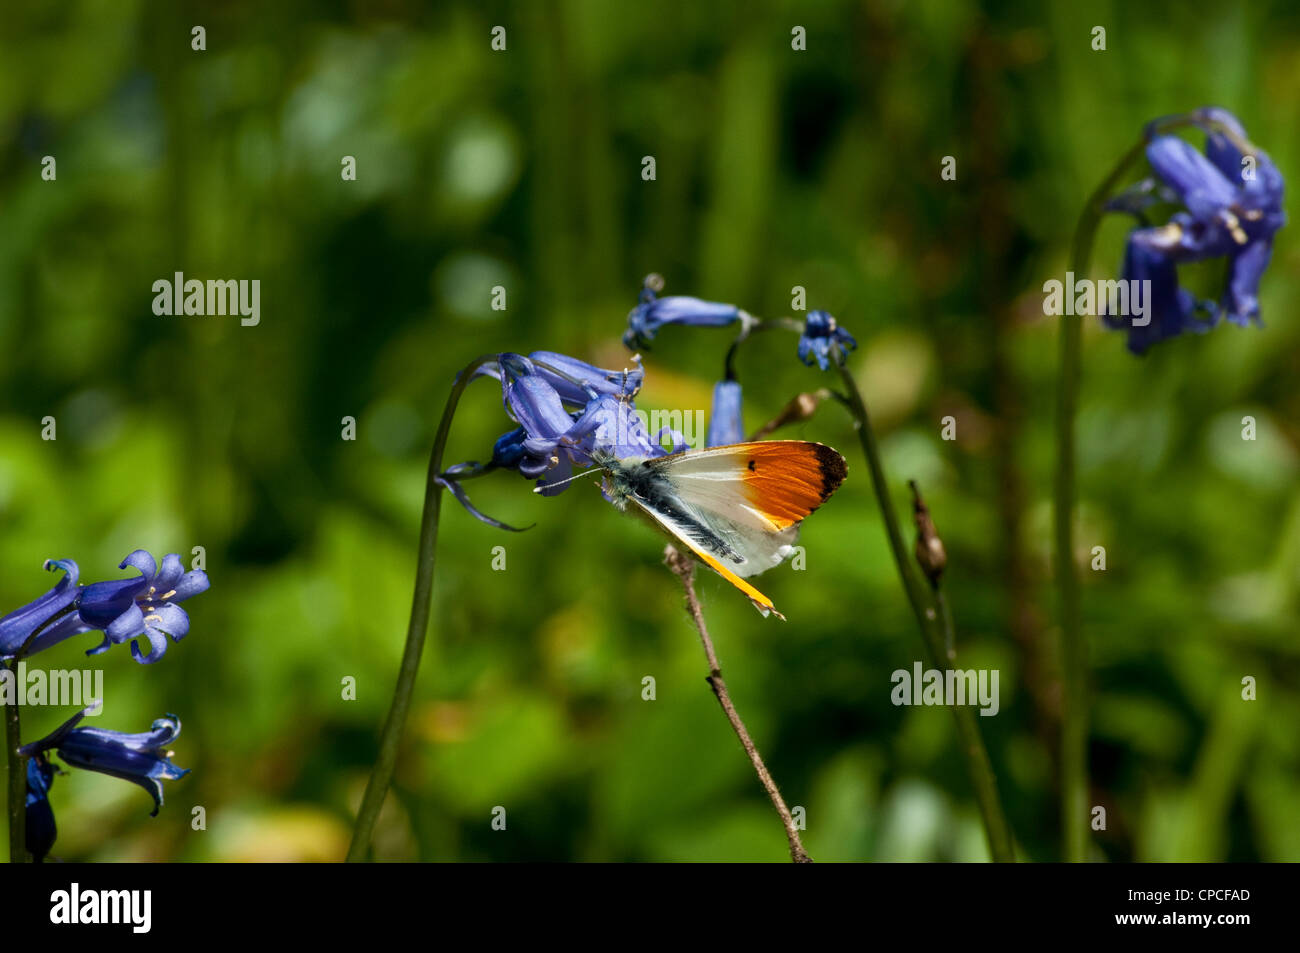 Punta anaranjada mariposa alimentándose de bluebell flor, Buckinghamshire, Inglaterra, Reino Unido Anthocharis cardamines Foto de stock